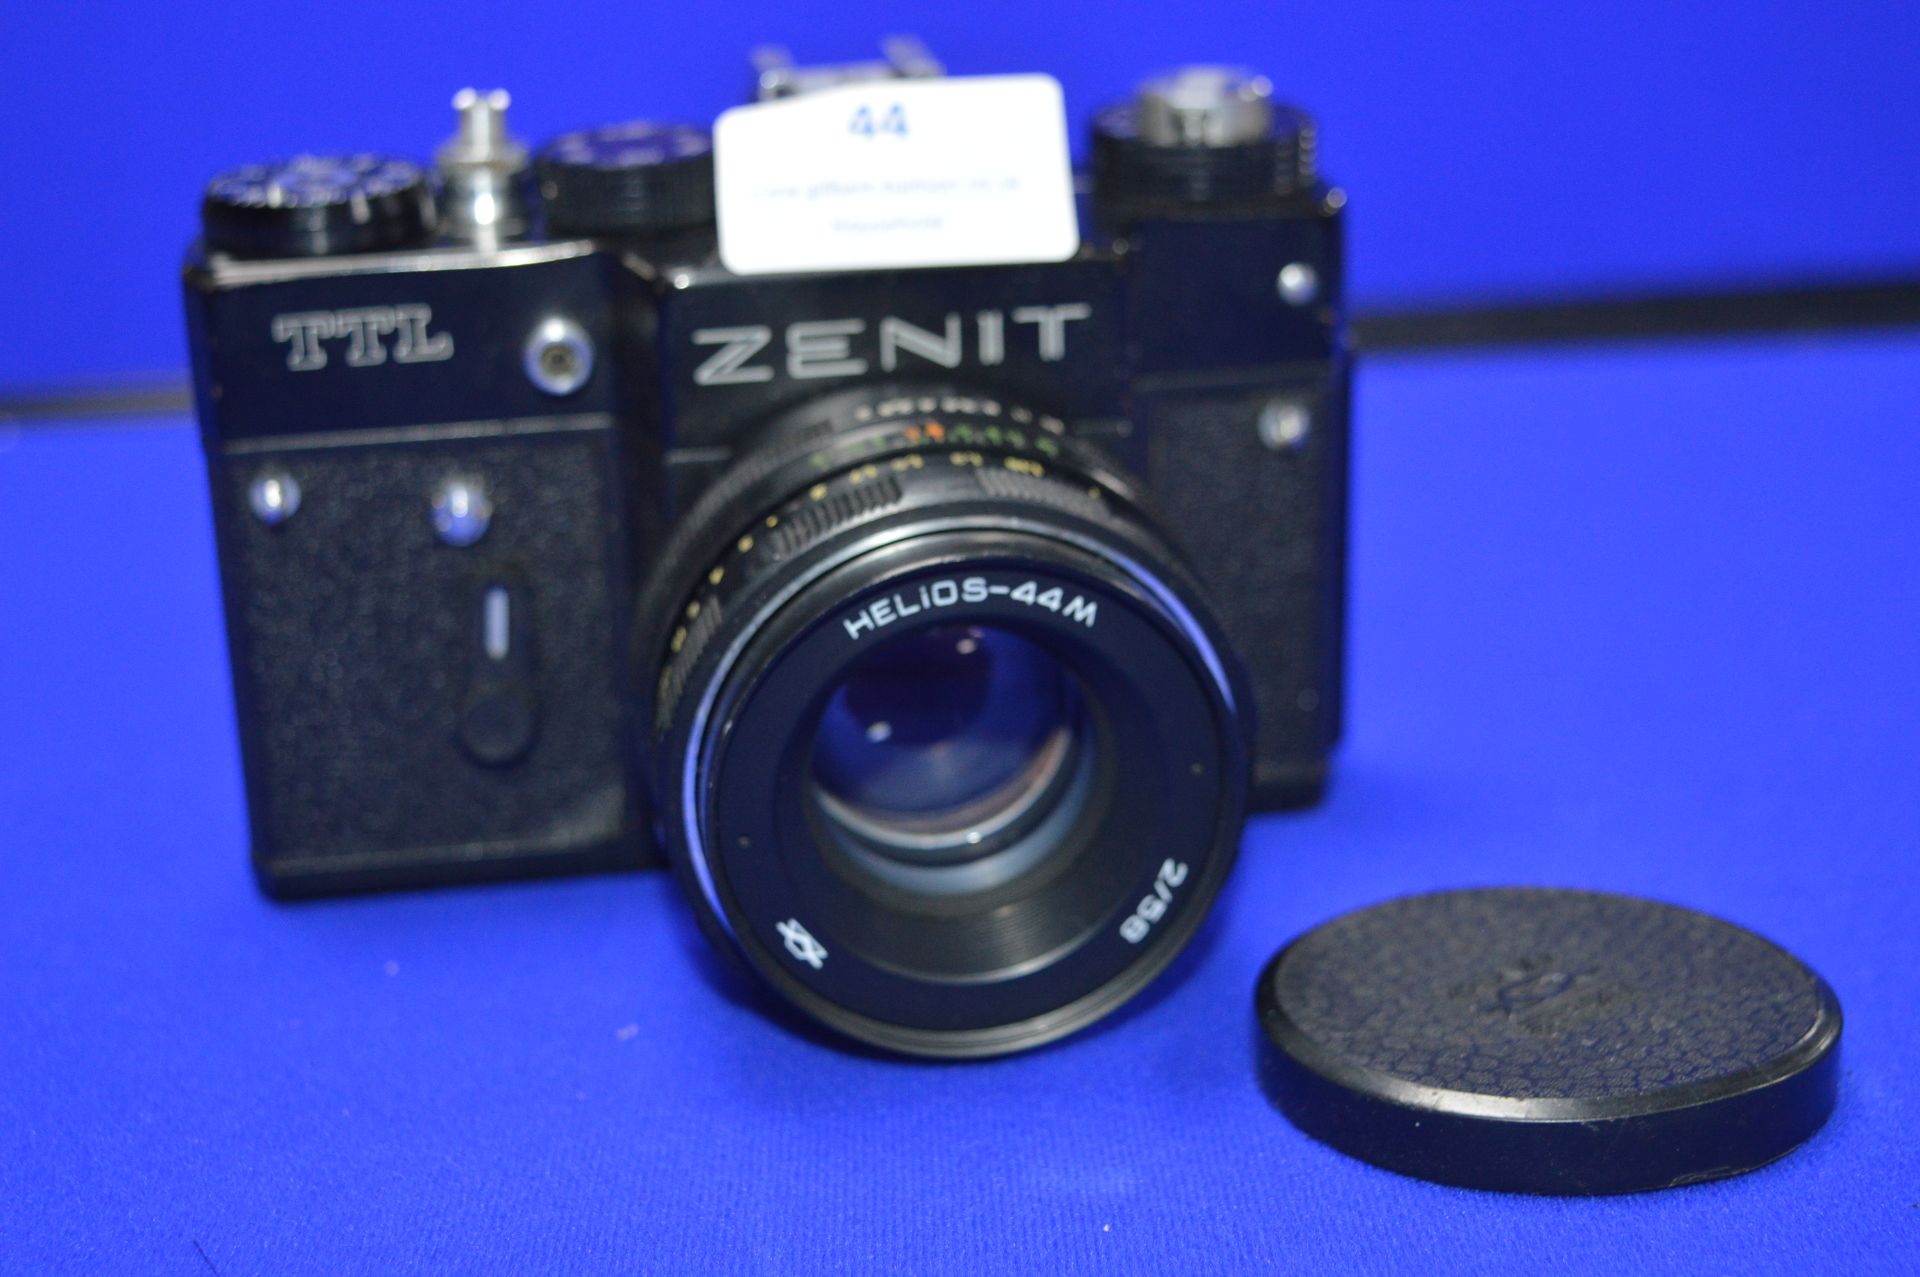 Zenit TTL SLR Camera with Helios-44M 2/58 Lens